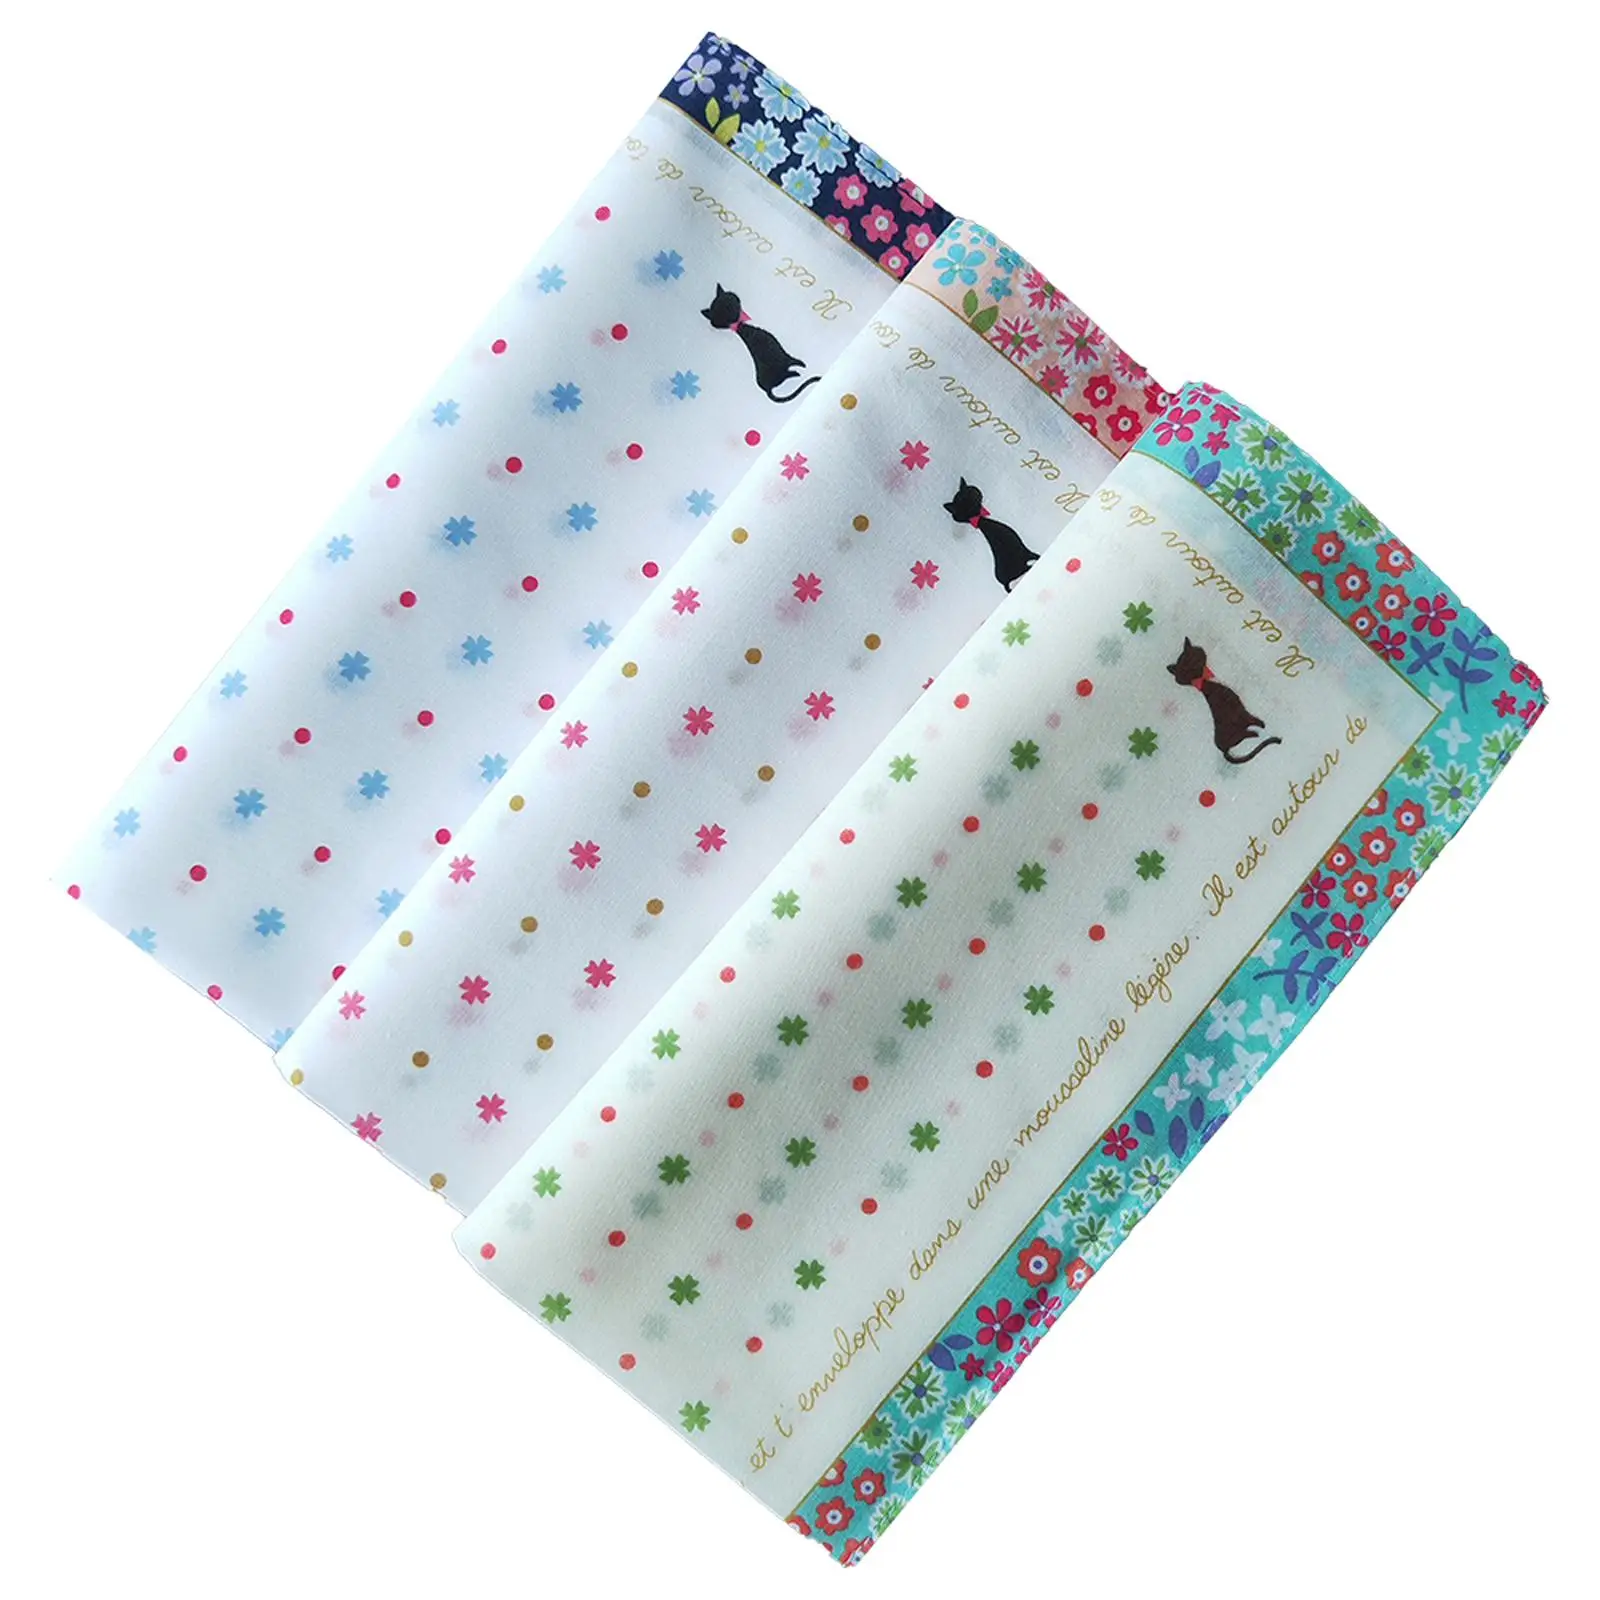 3x Multicolour Women Cloth Handkerchiefs Square Pocket Towel for Dinner Table Events